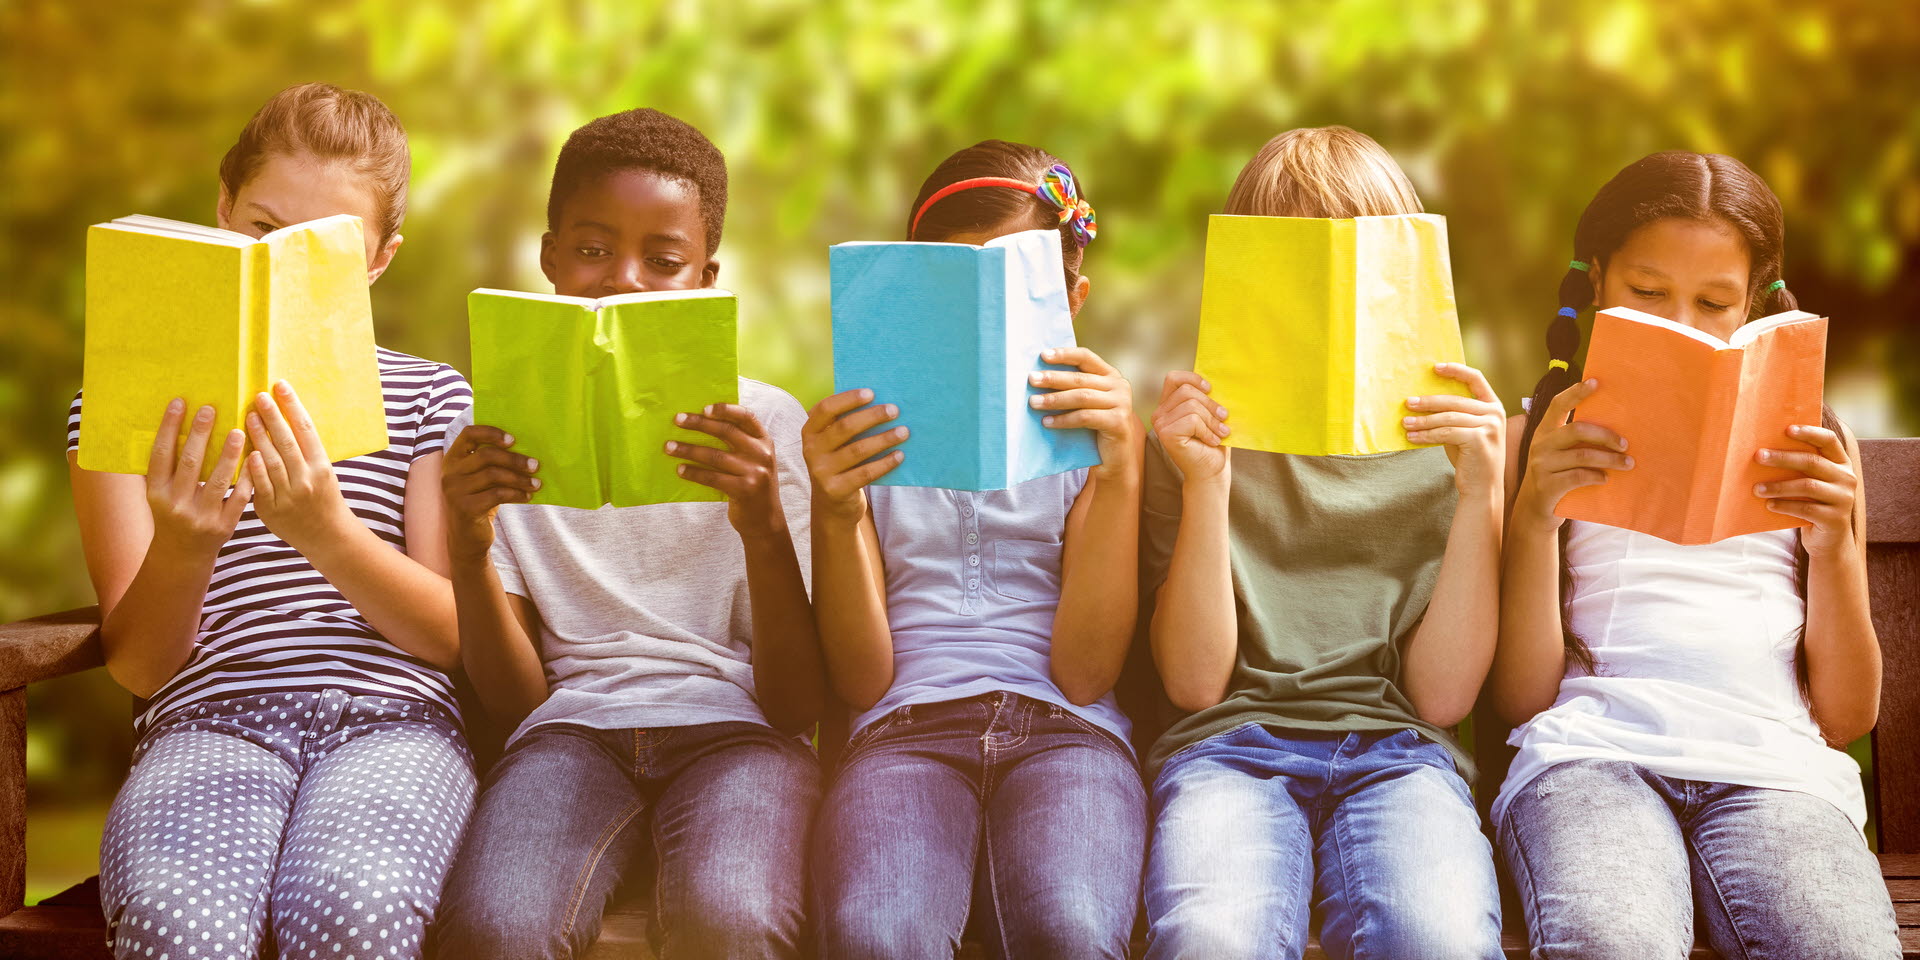 Group of children reading